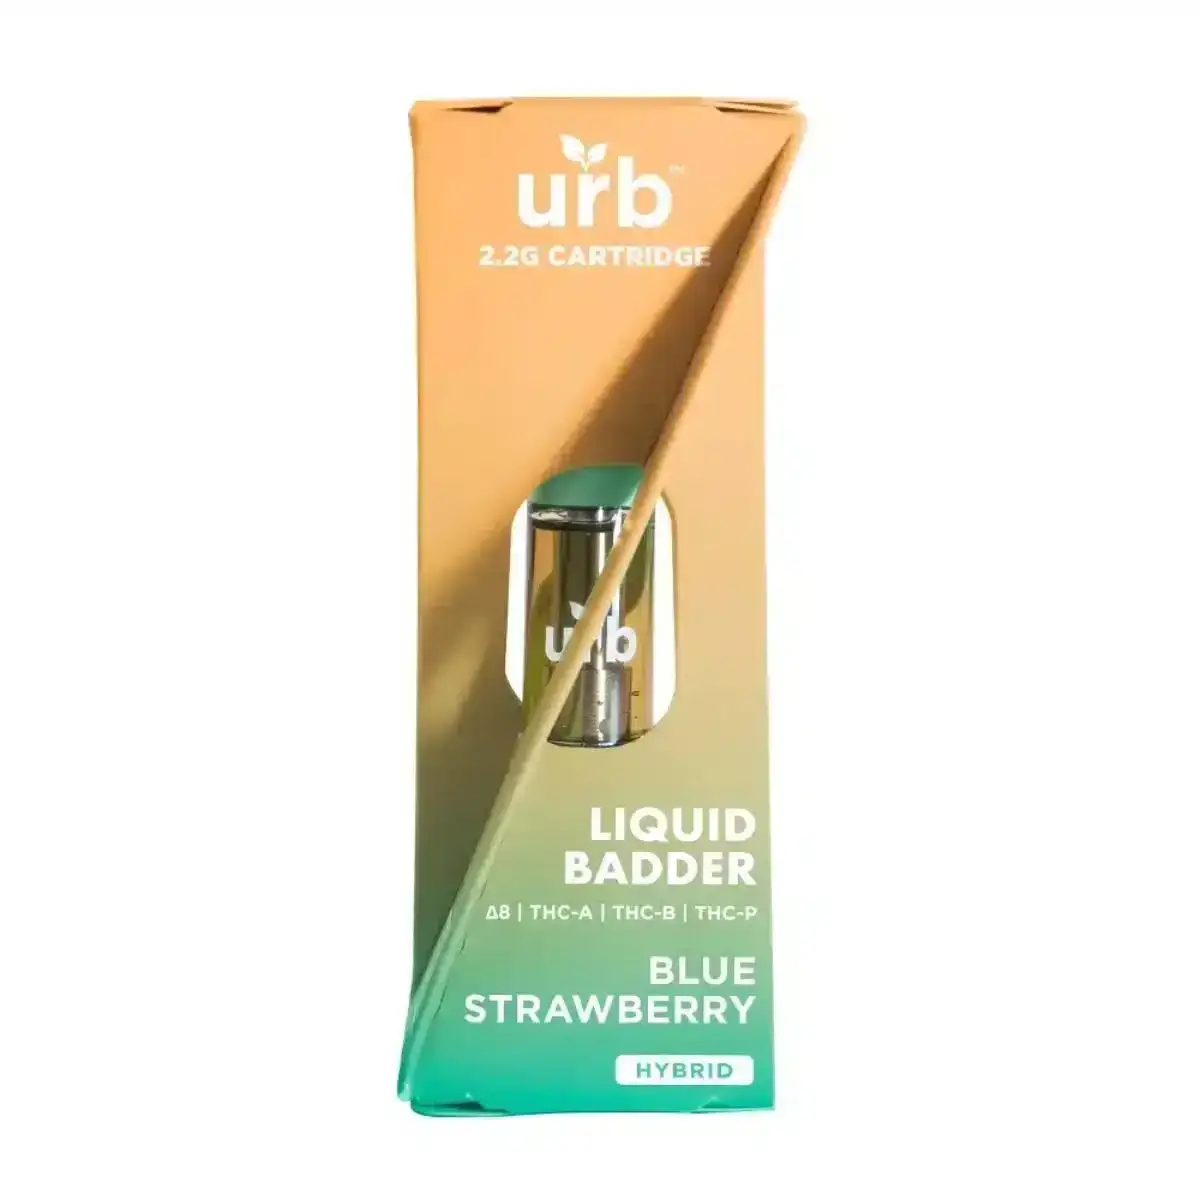 Image of Urb Liquid Badder Vape Cartridges 2g